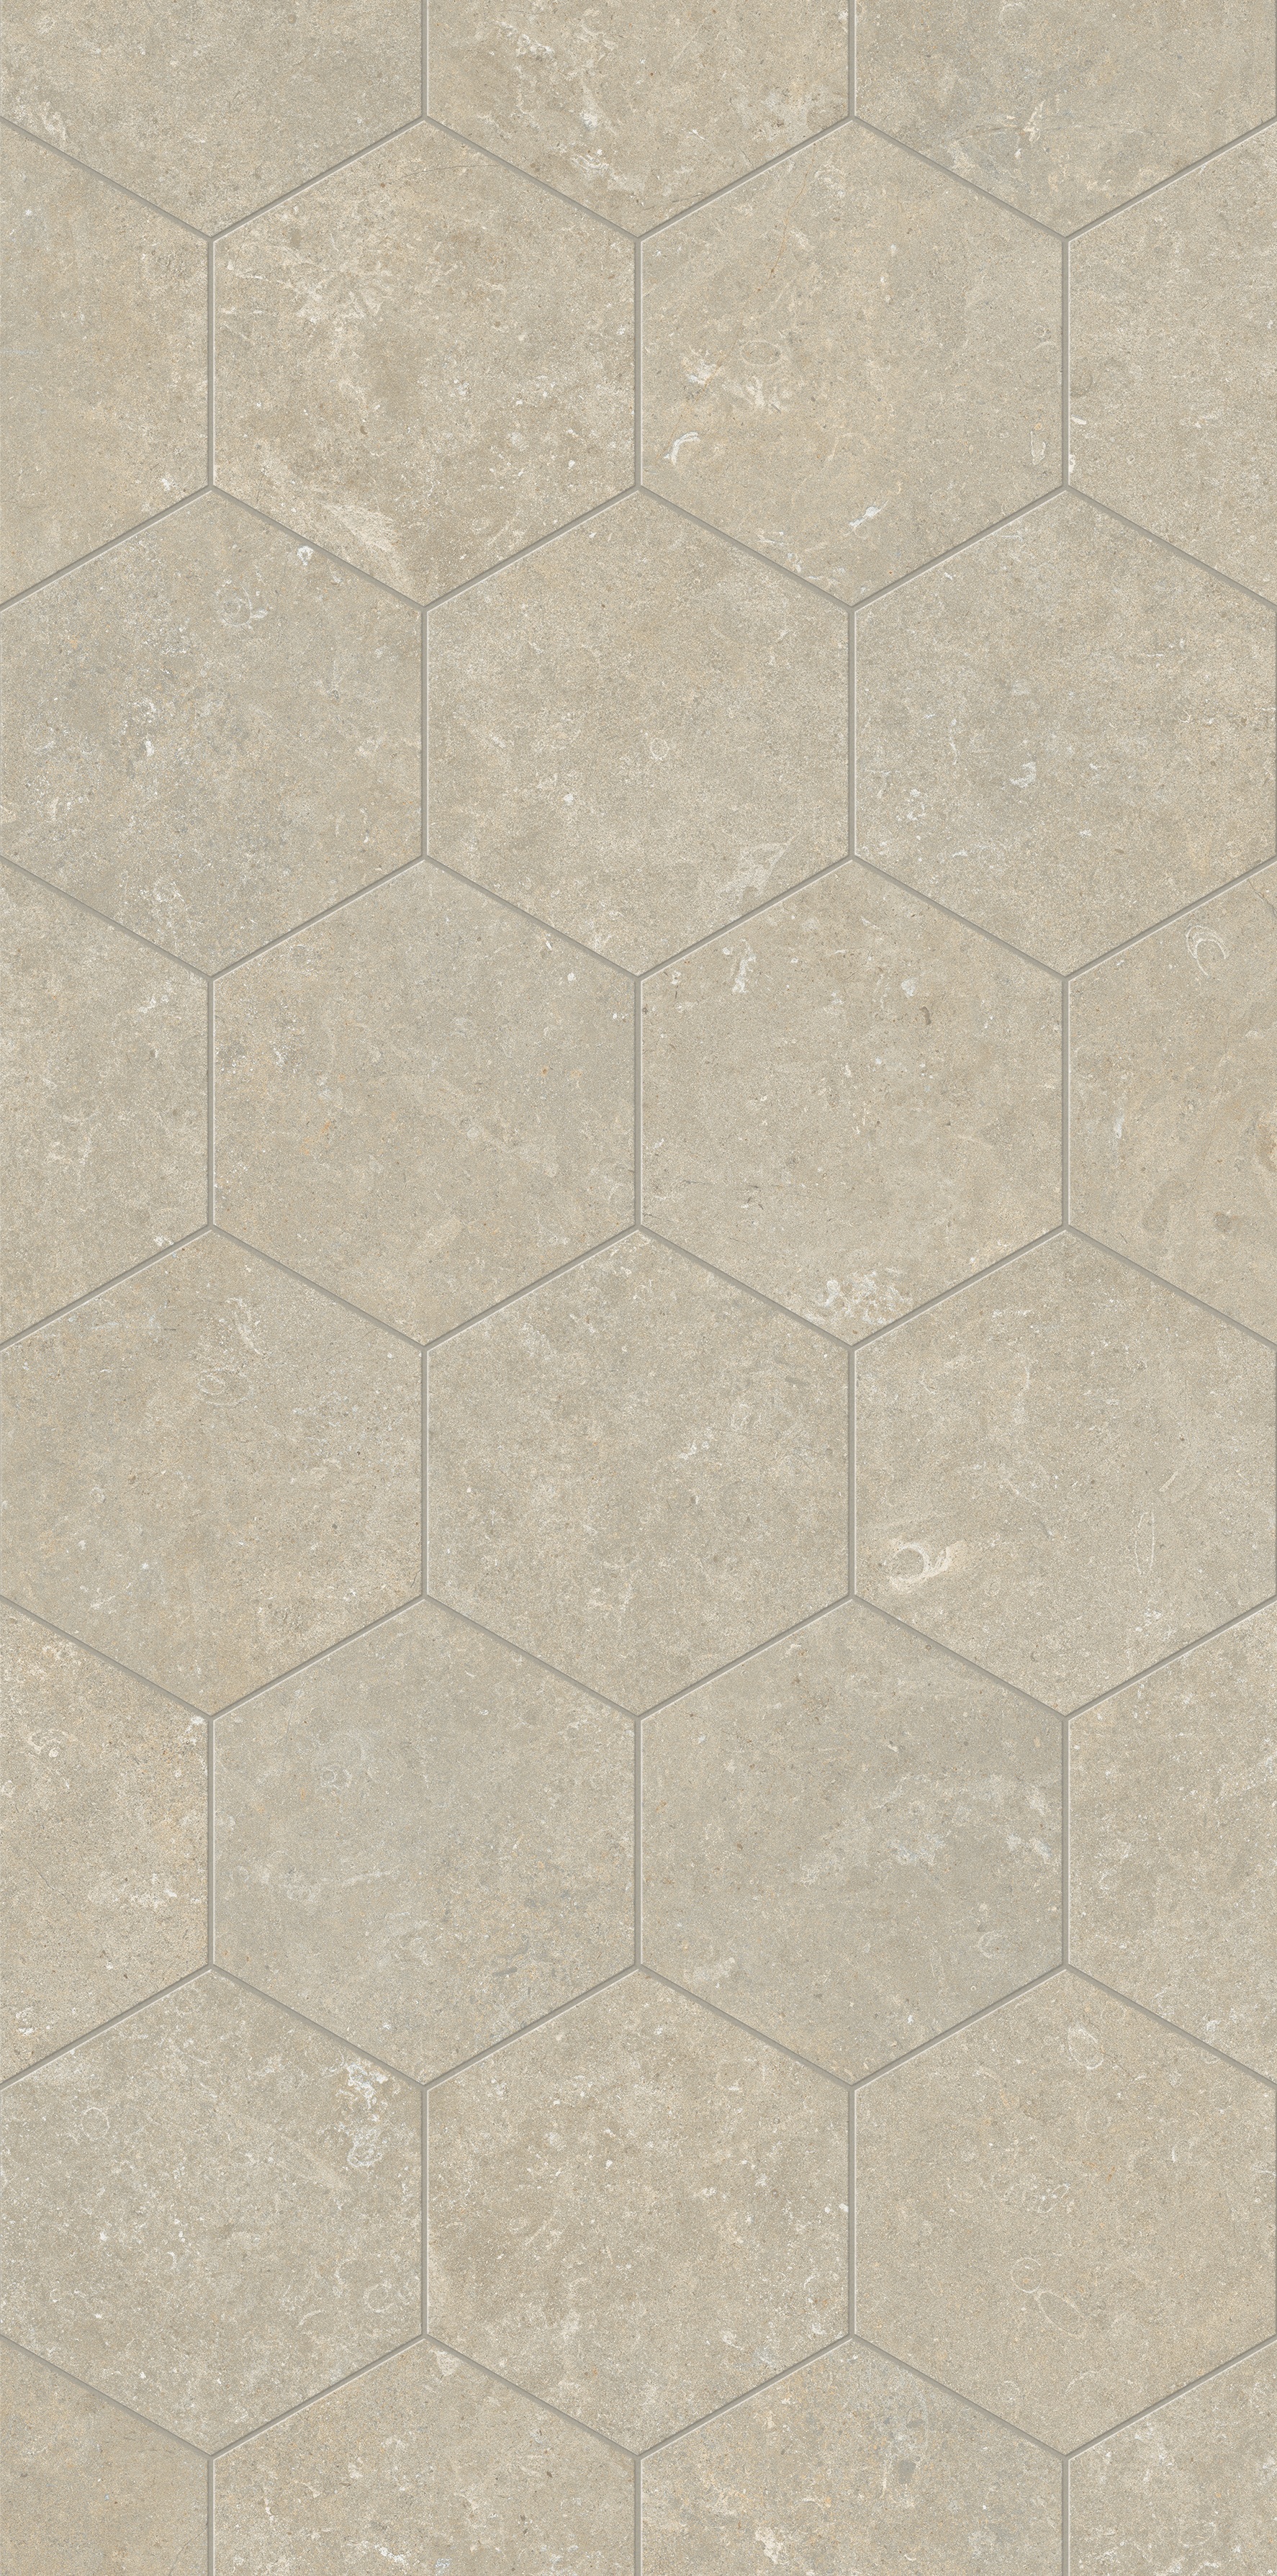 Marca Corona Arkistyle Limy Naturale – Matt Esagona J158 naturale – matt 21,6x25cm 9mm